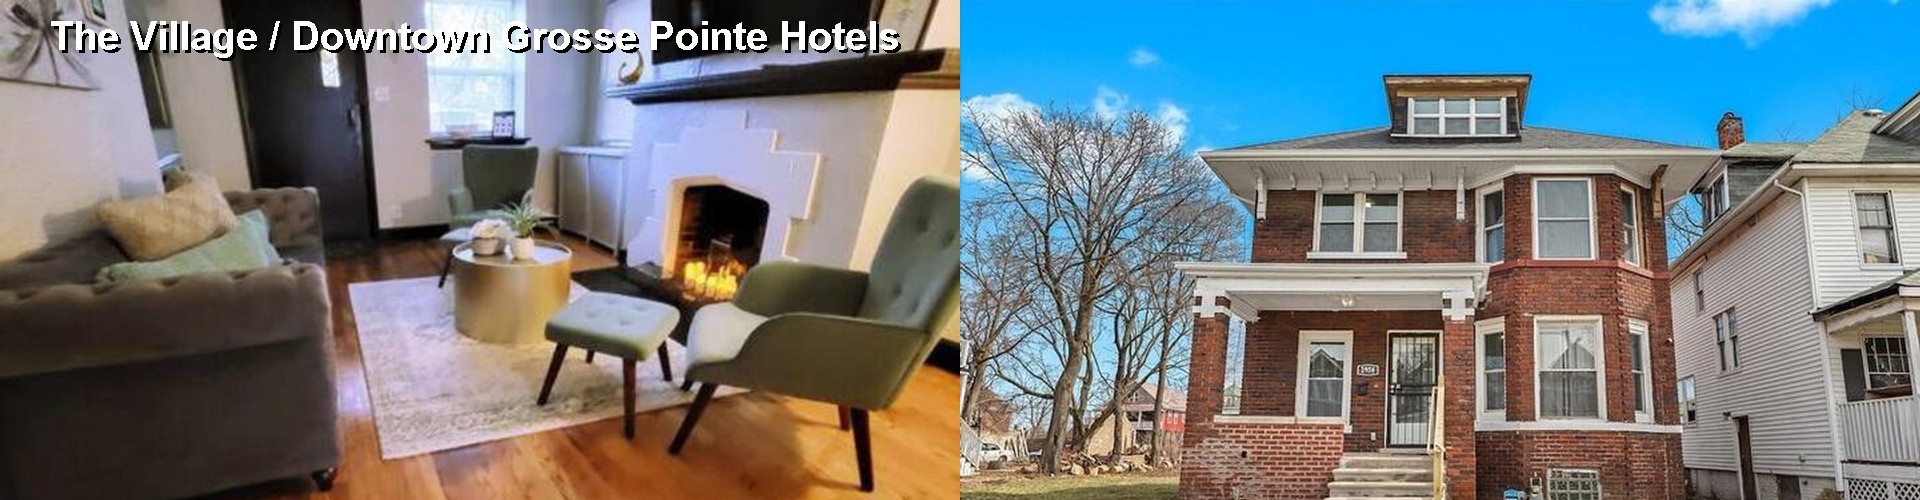 3 Best Hotels near The Village / Downtown Grosse Pointe